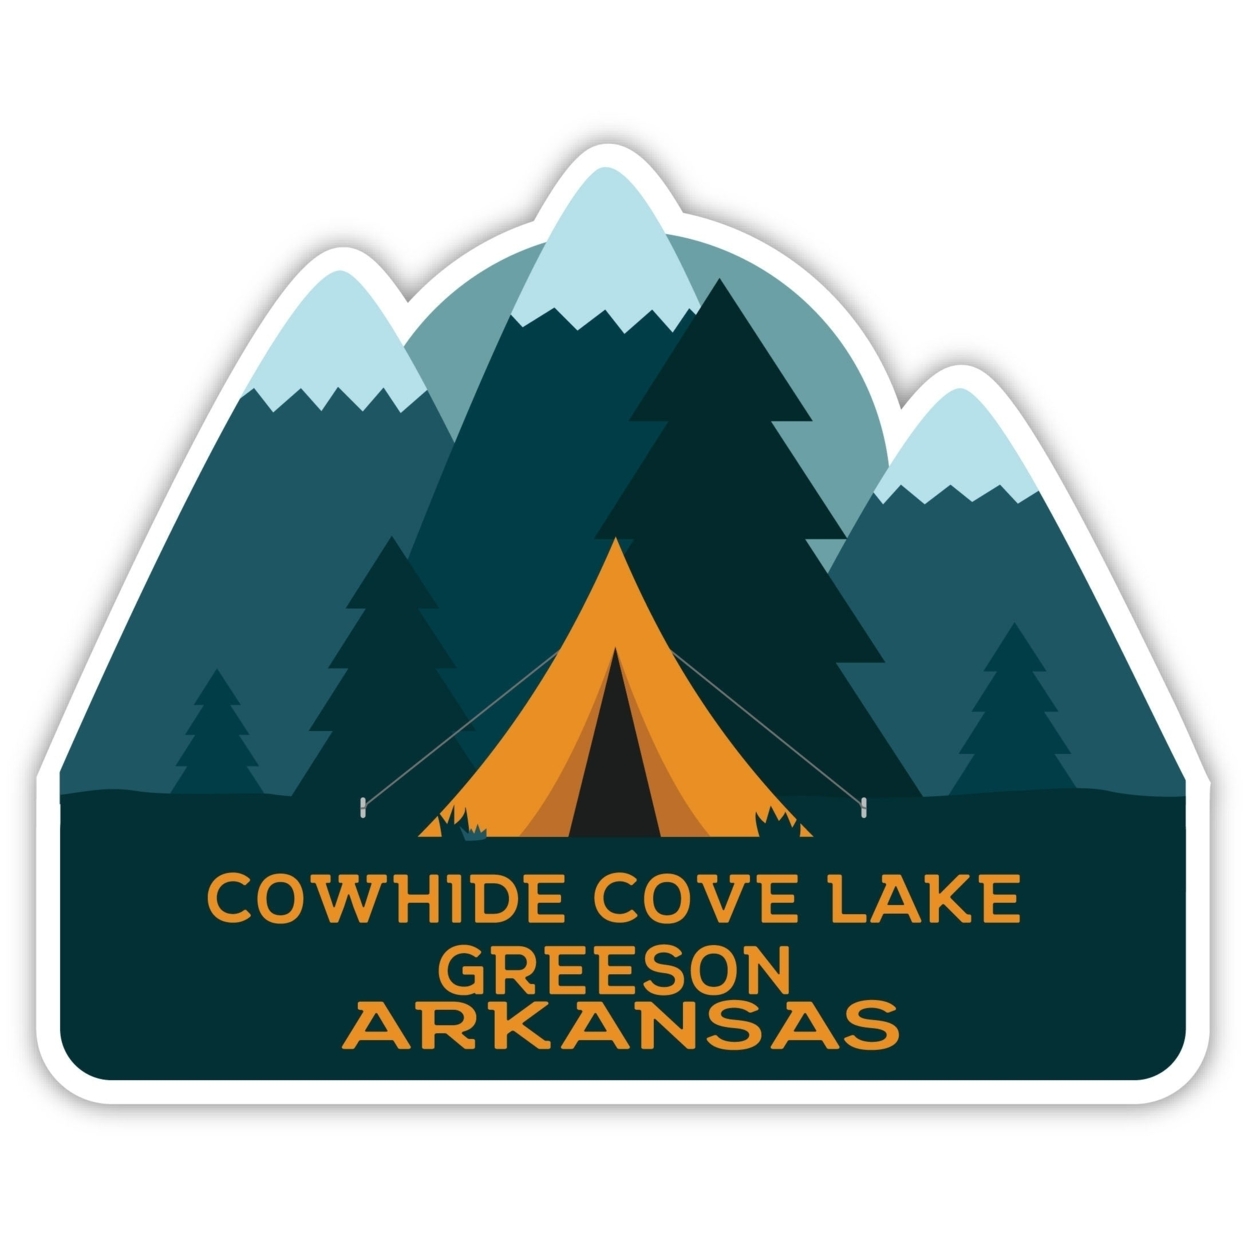 Cowhide Cove Lake Greeson Arkansas Souvenir Decorative Stickers (Choose Theme And Size) - Single Unit, 4-Inch, Tent